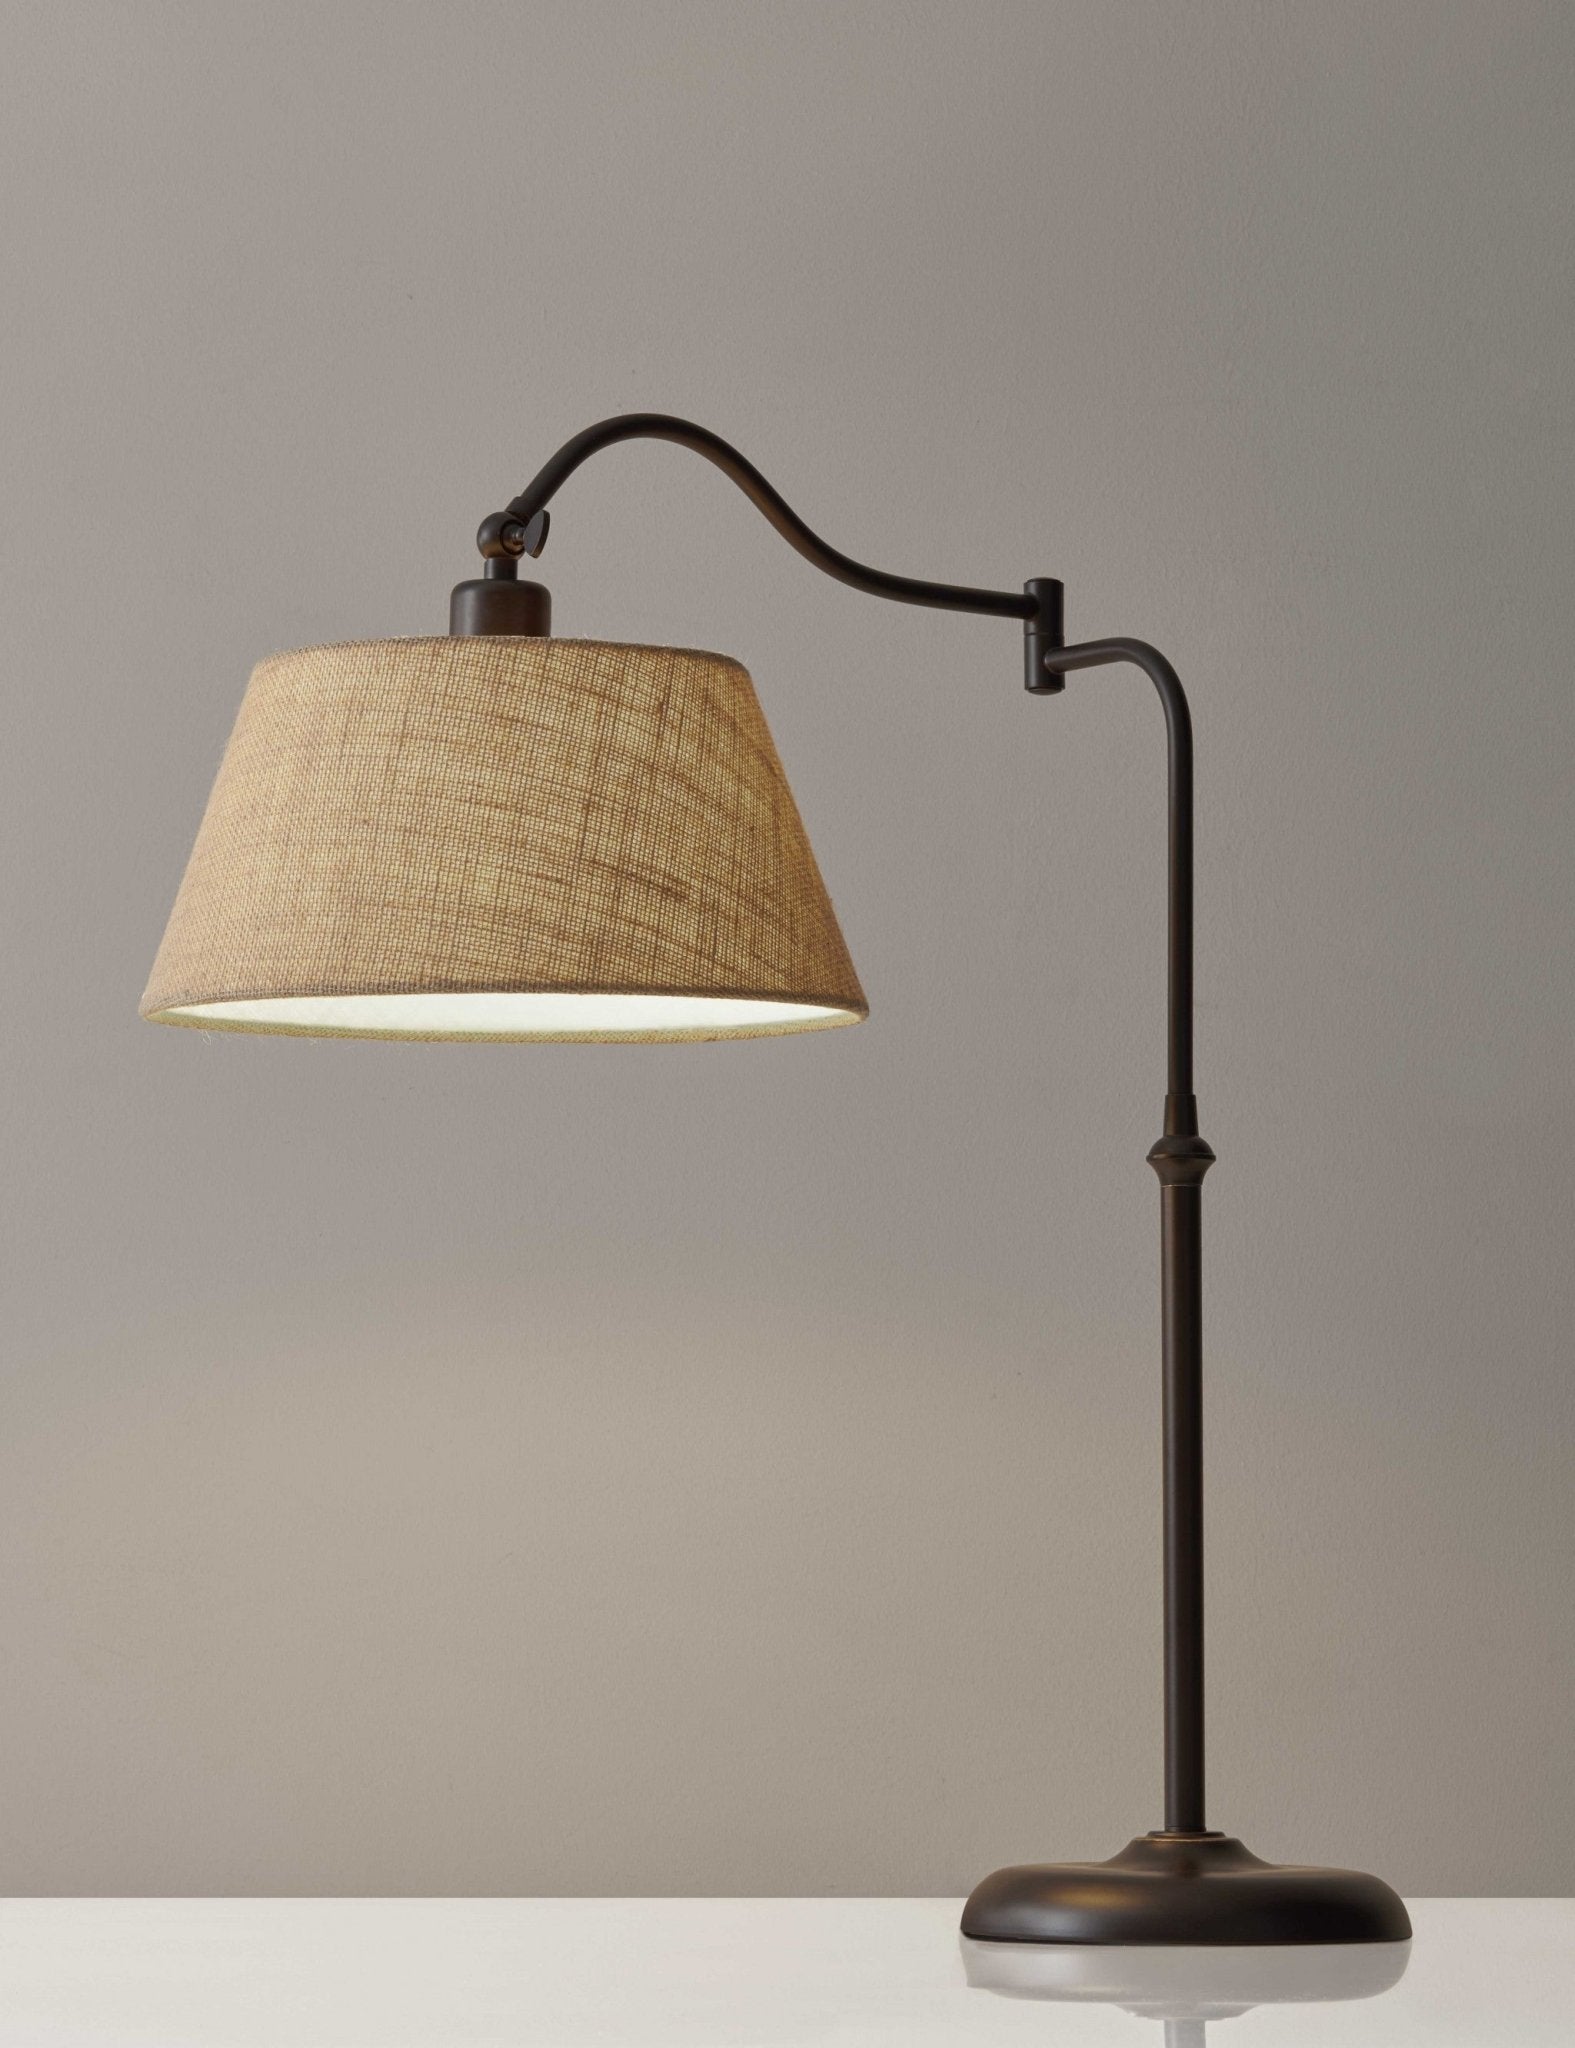 Dark-Bronze-Metal-Swing-Arm-Adjustable-Table-Lamp-Table-Lamps